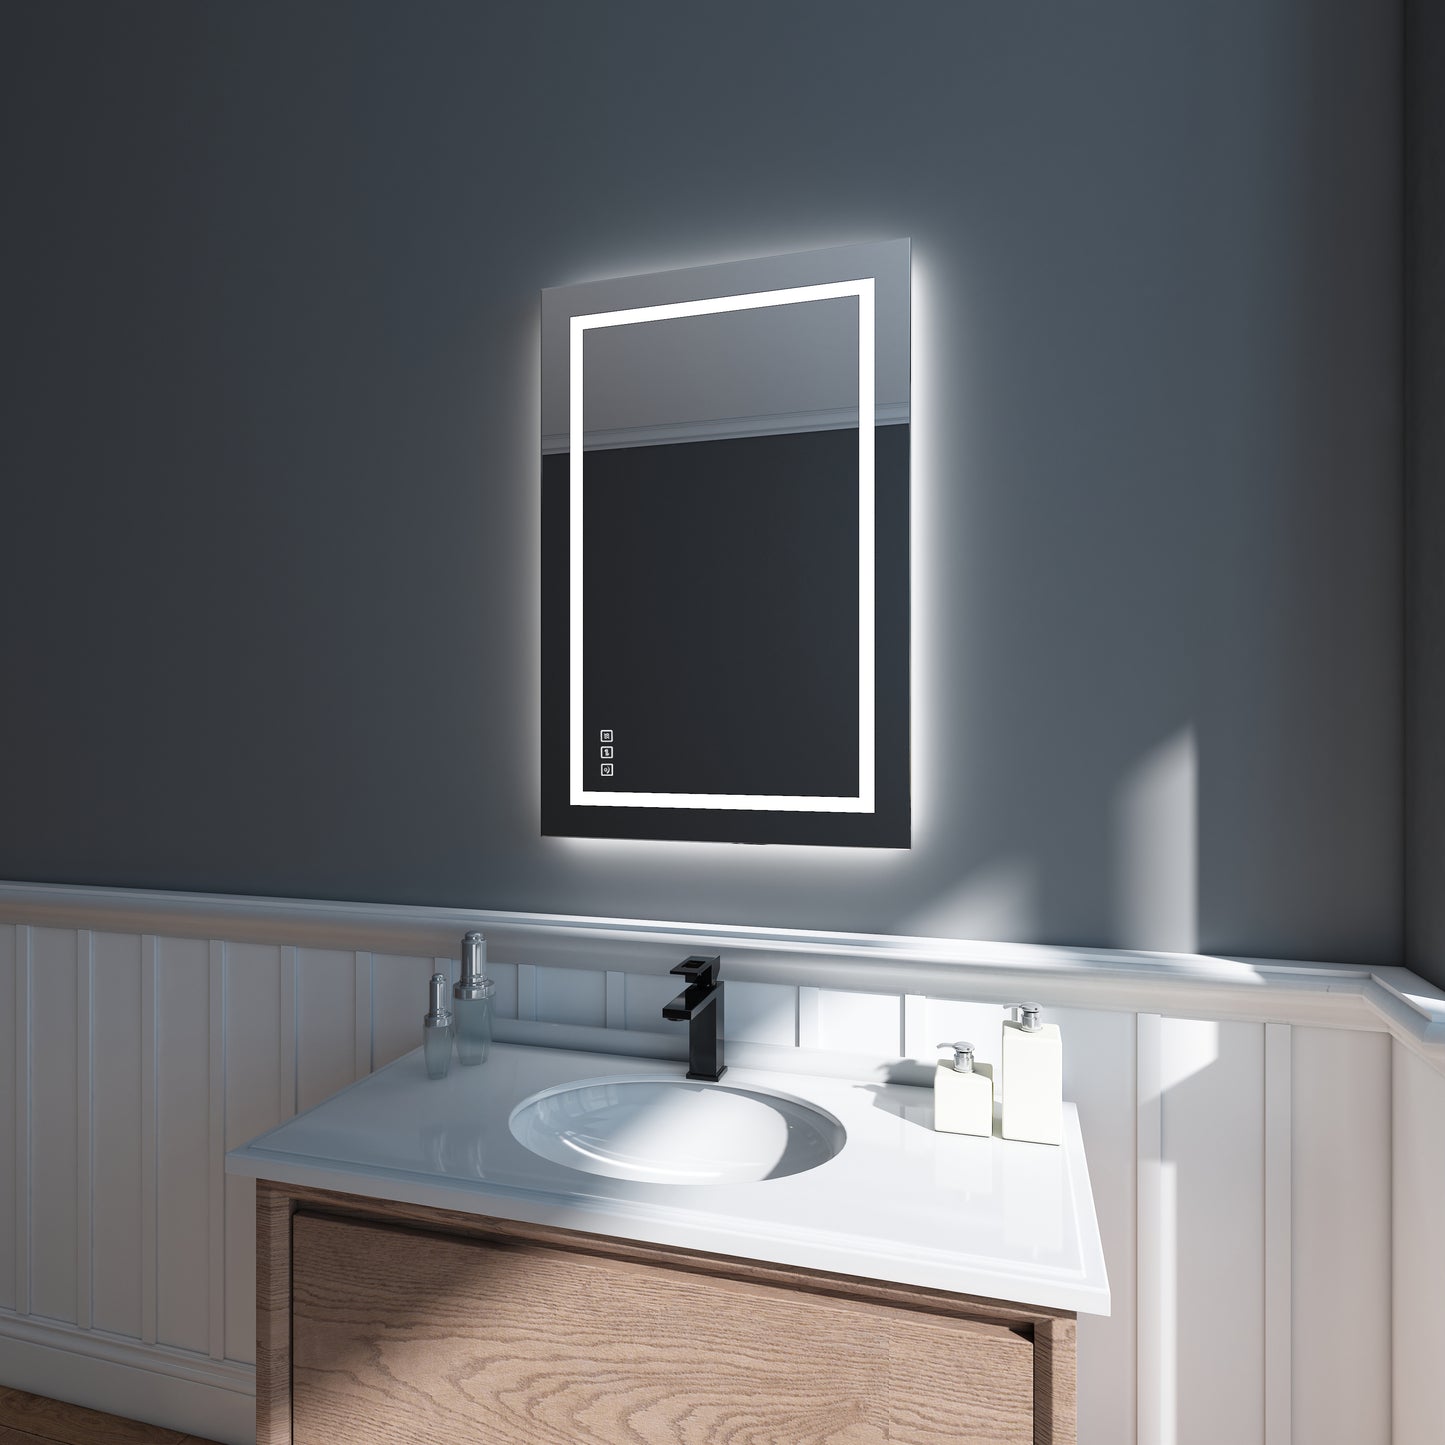 Waterpar® 24 in. W x 36 in. H LED Rectangular Frameless Anti-Fog Bathroom Mirror Front & Backlit